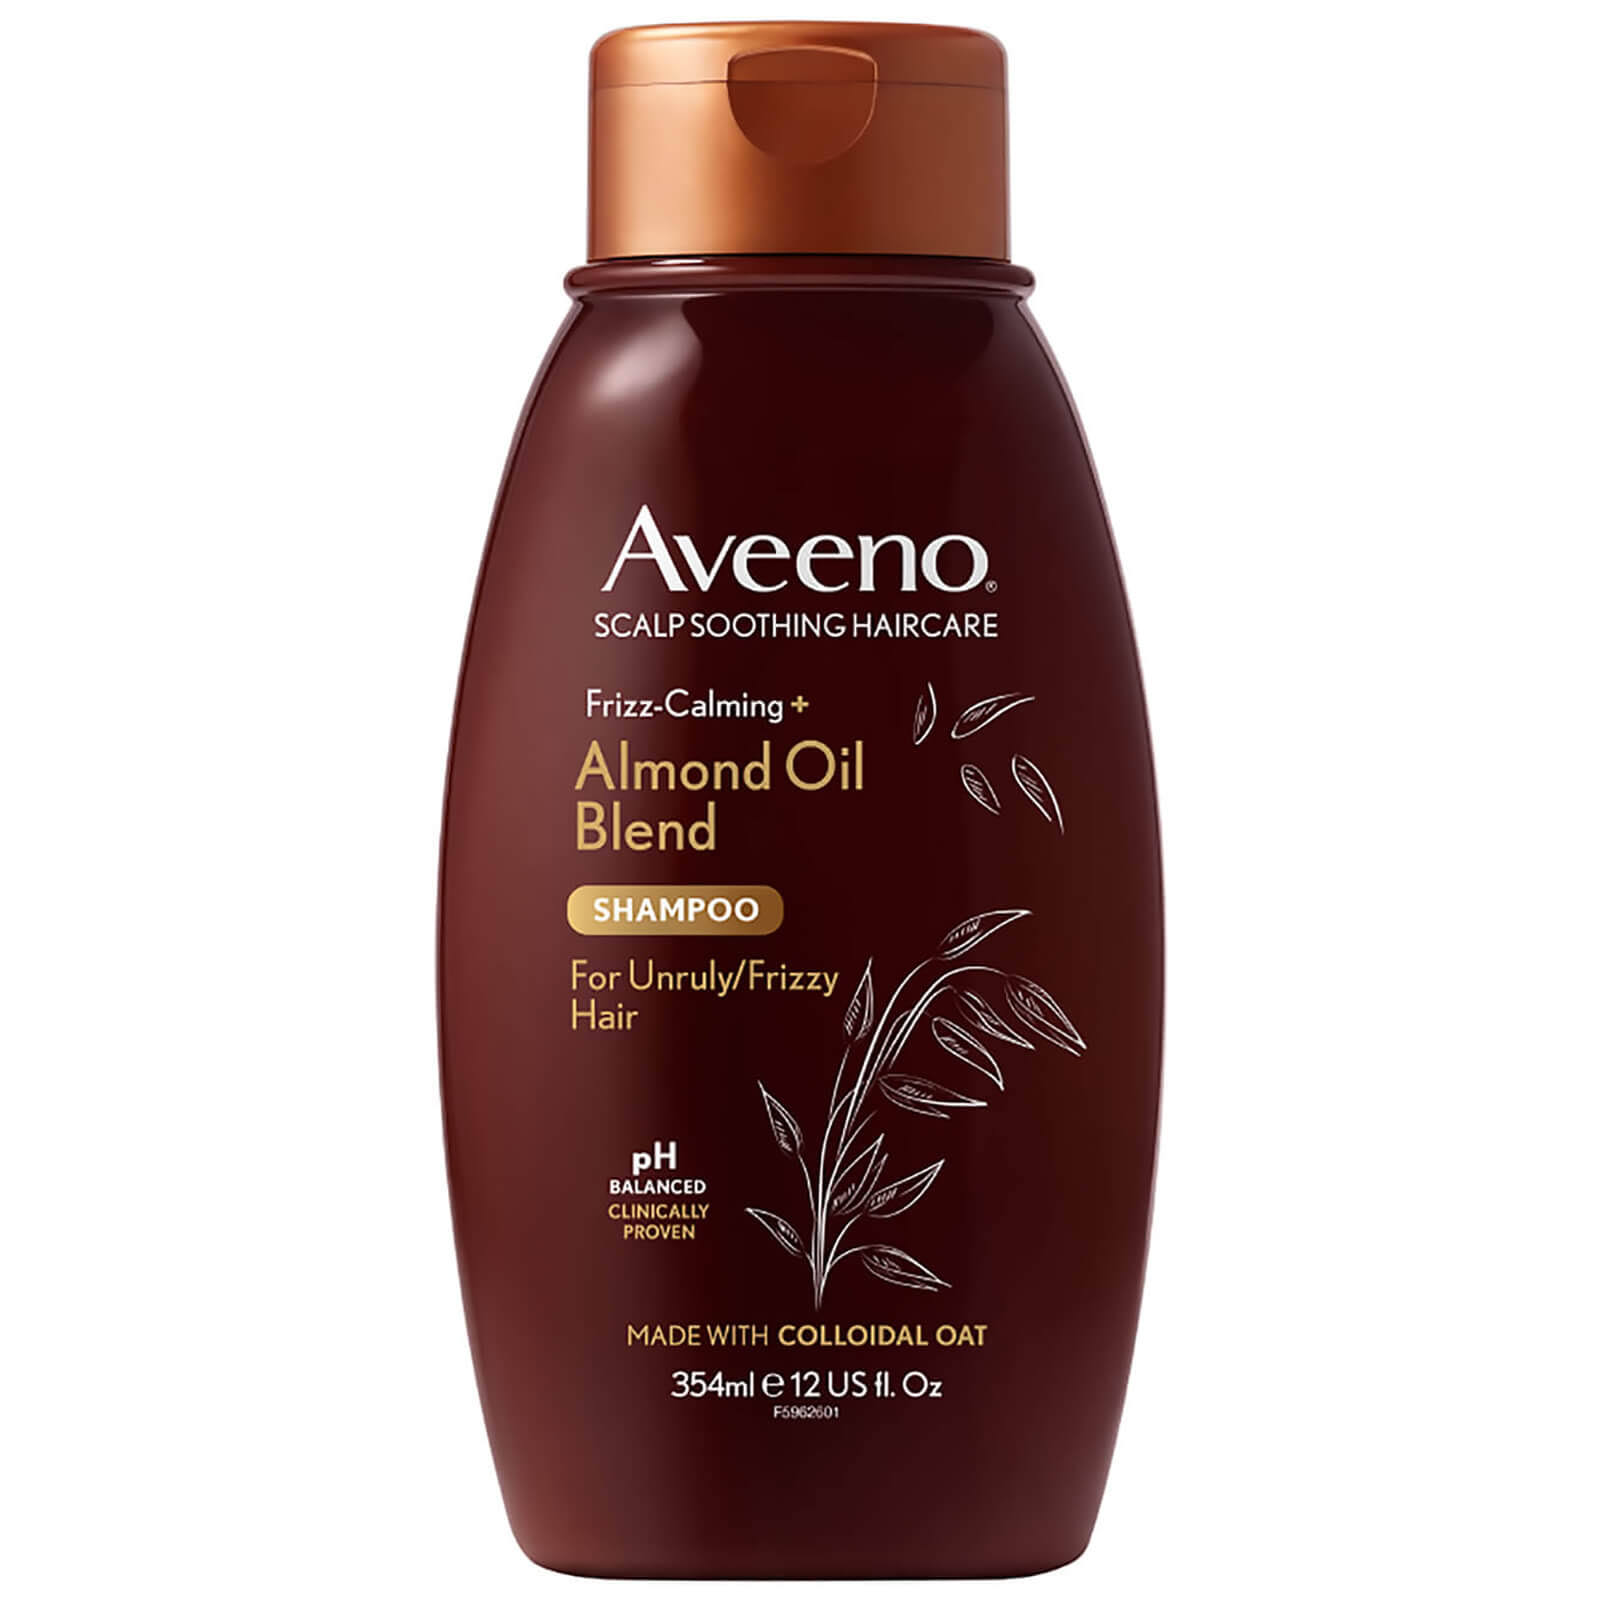 Aveeno Frizz Calming almond Oil Blend Shampoo 354ml